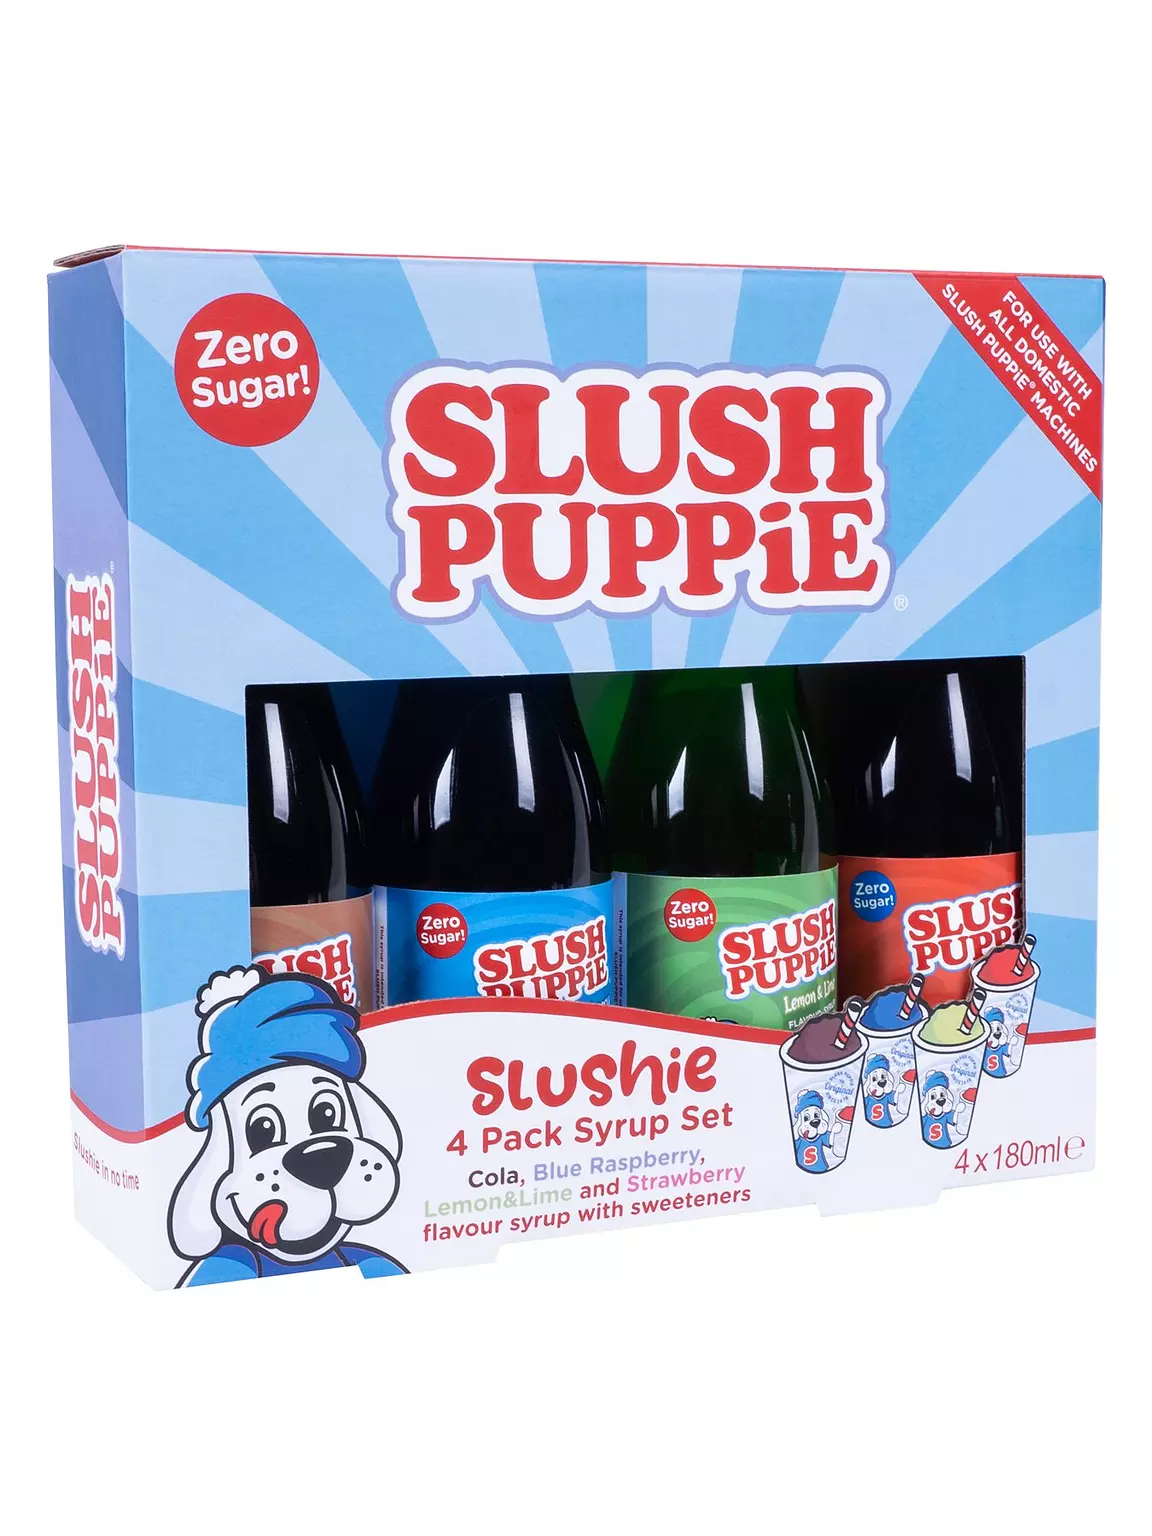 Slush Puppy siroop (zero sugar) 4-pack 180ml 